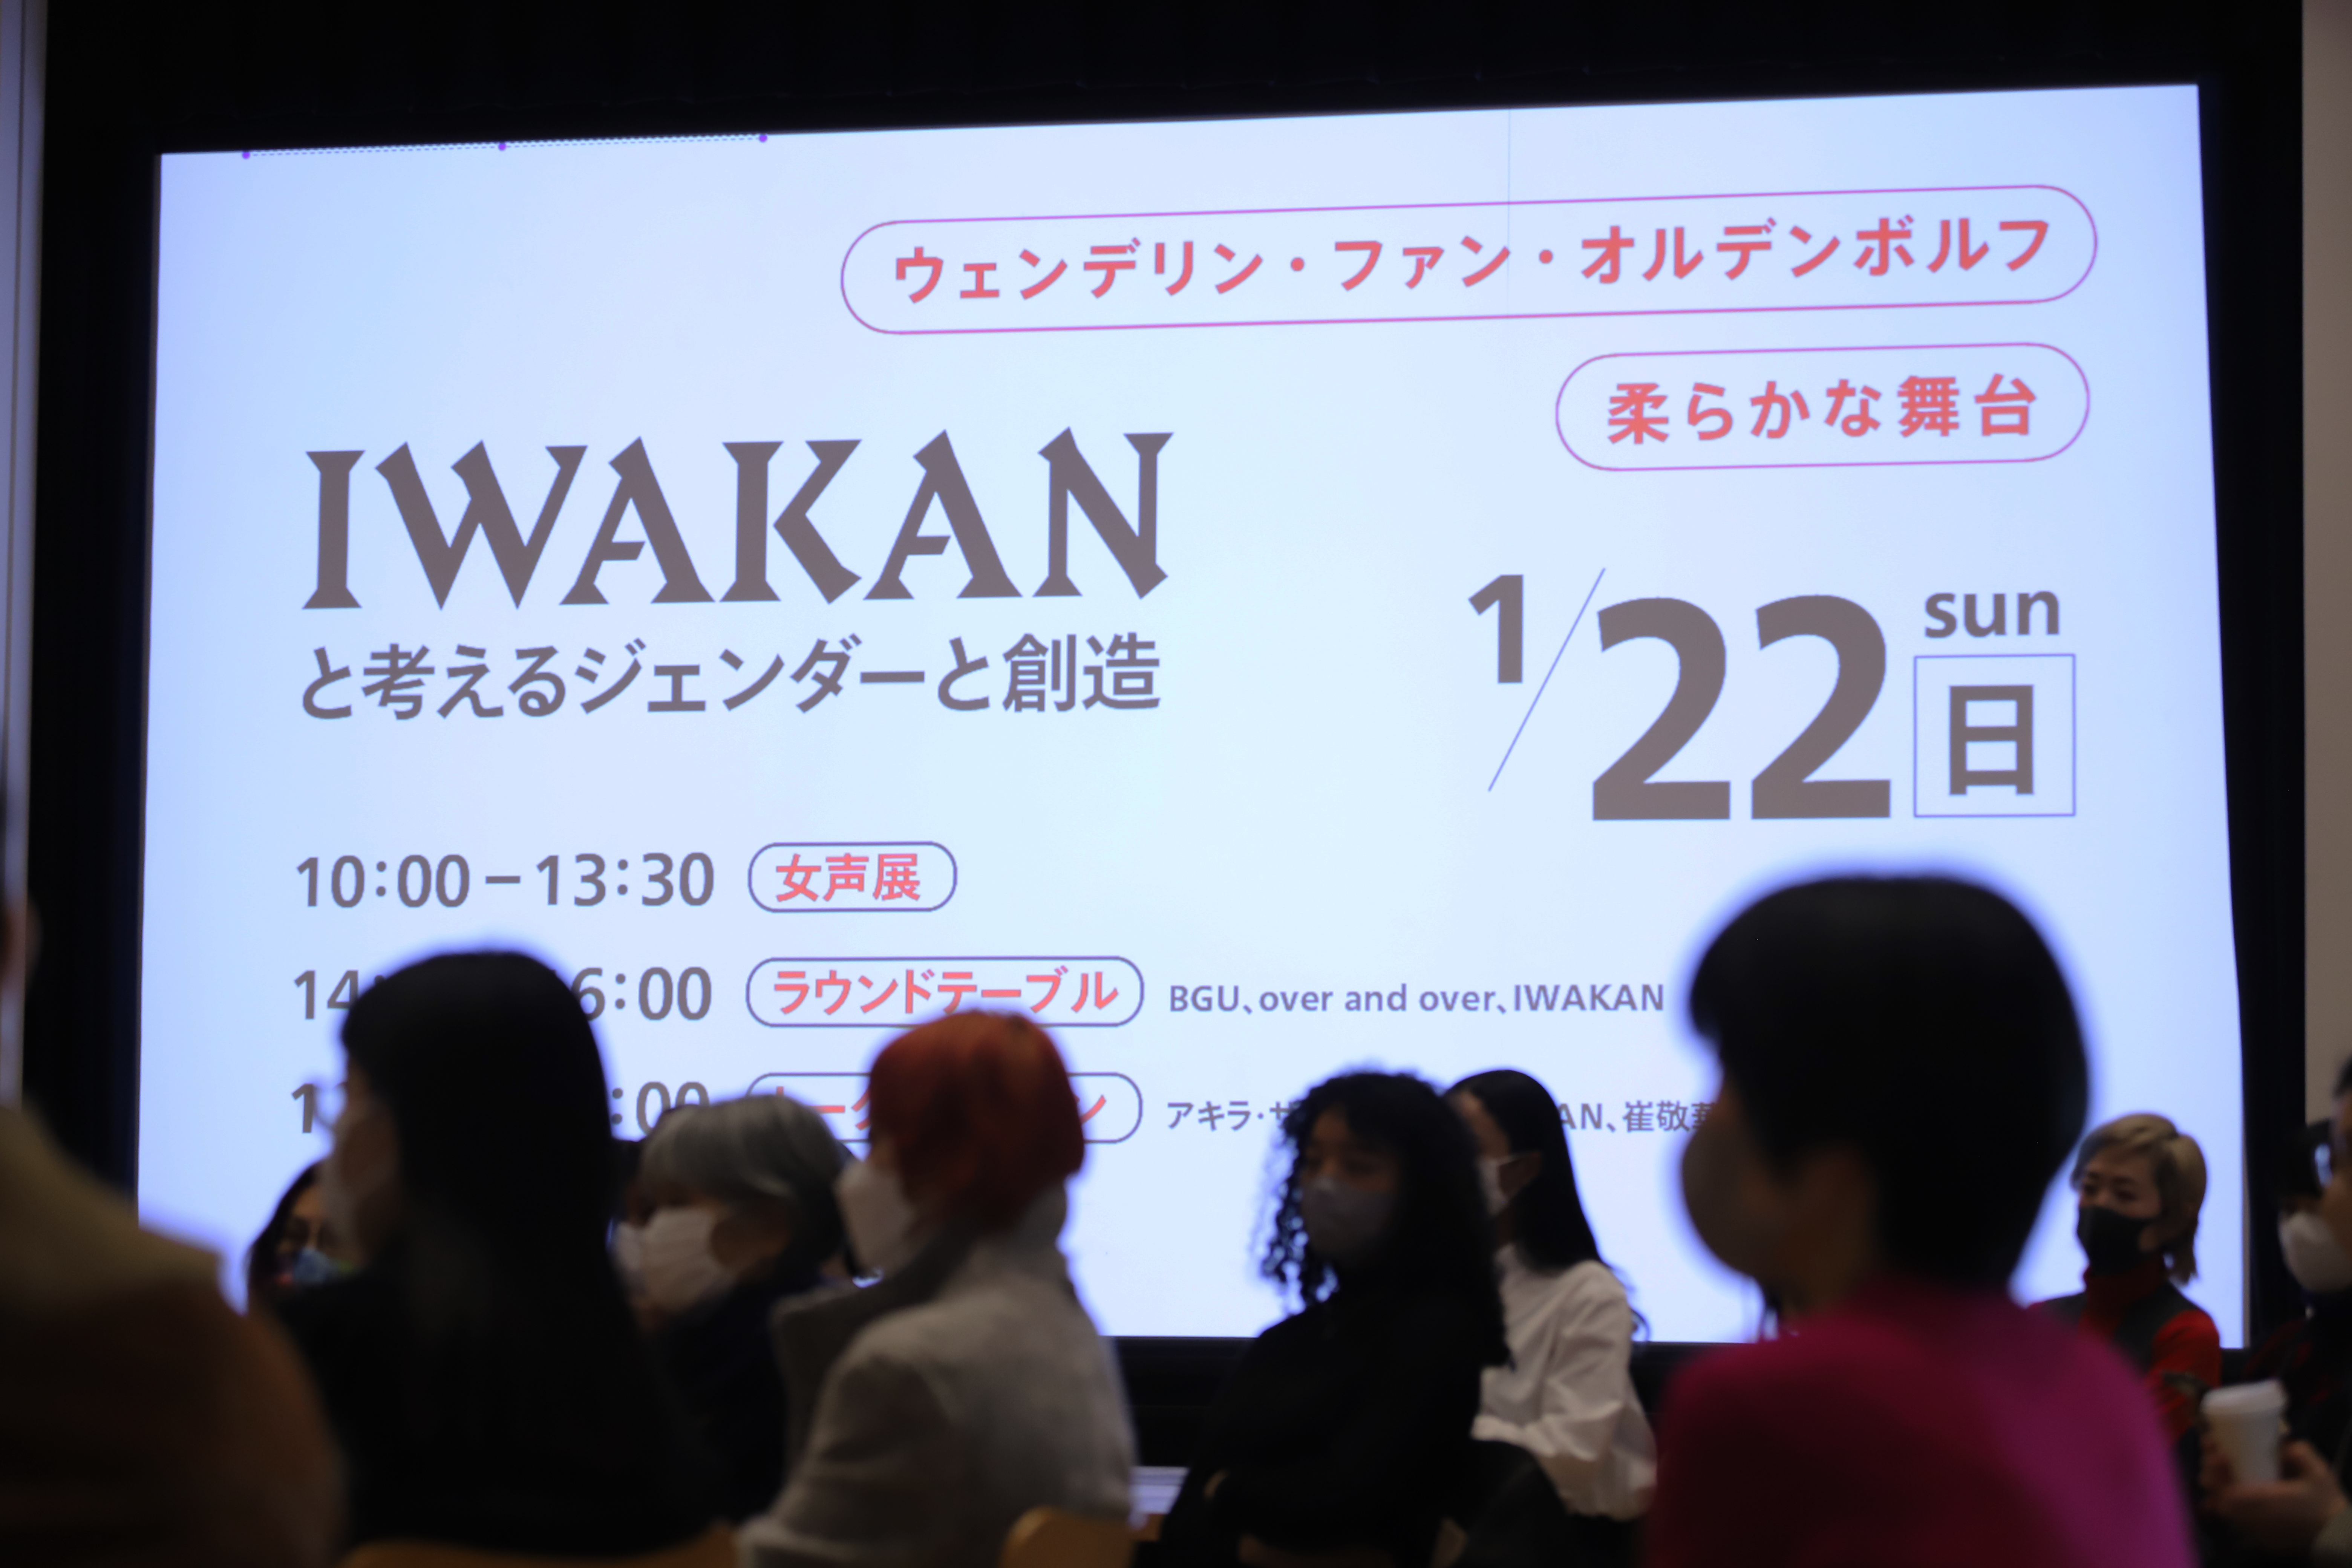 【EVENT REPORT】「IWAKAN と考えるジェンダーと創造」